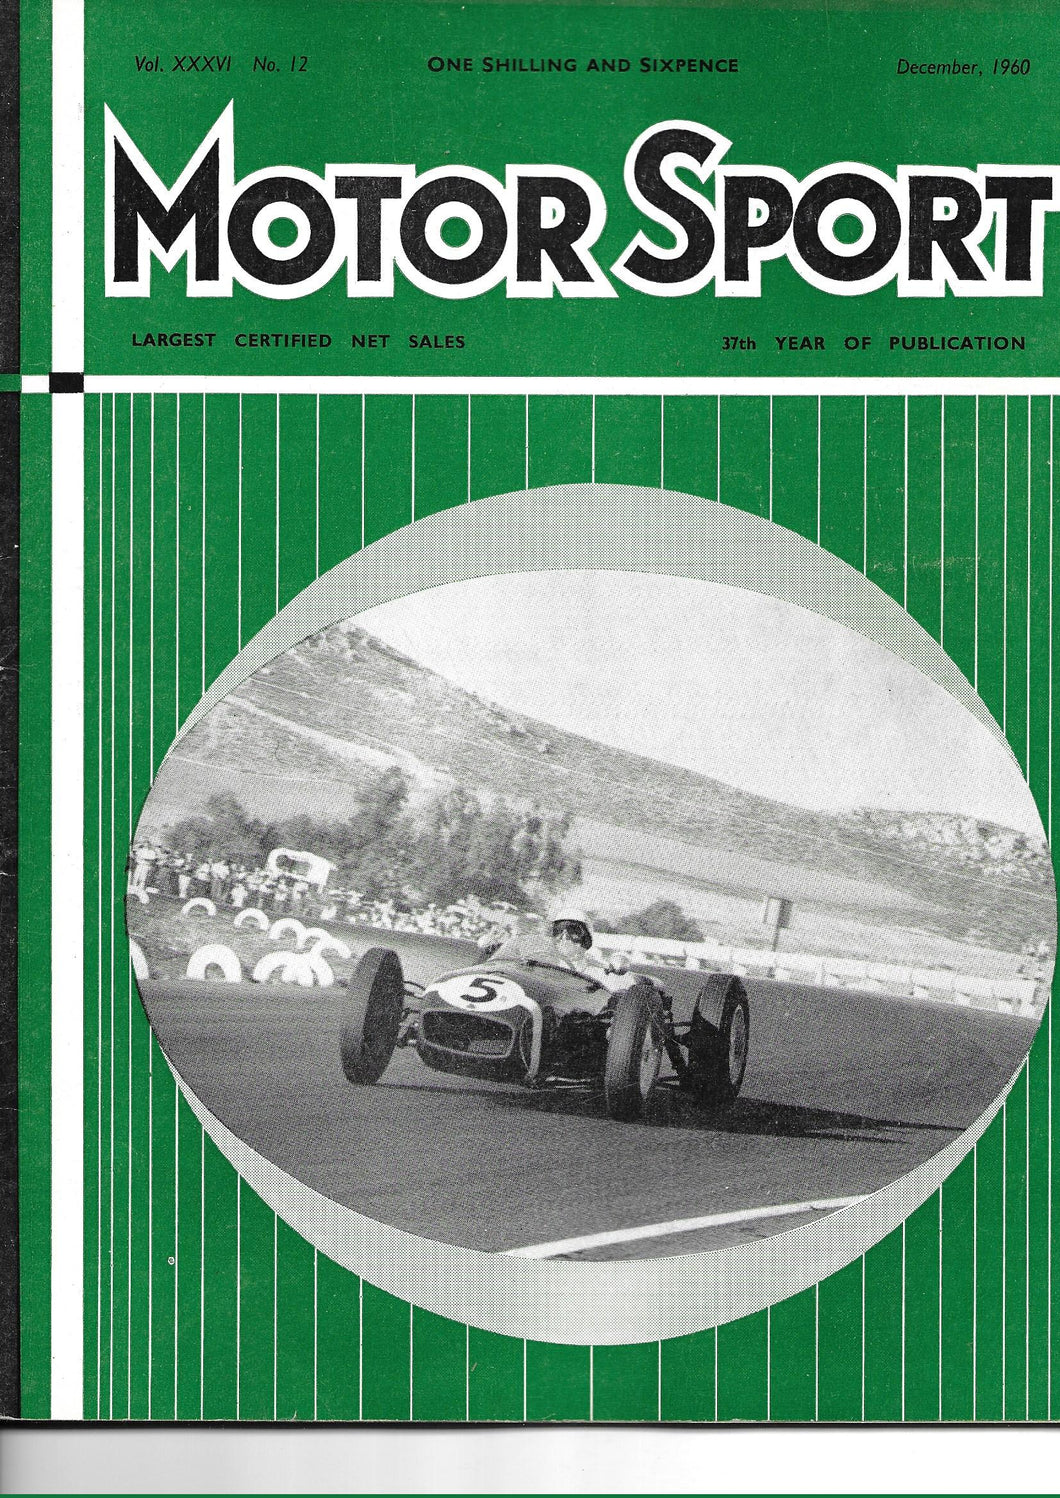 Motor Sport, Motorsport, Magazine, Vol XXXVI No.12 December 1960